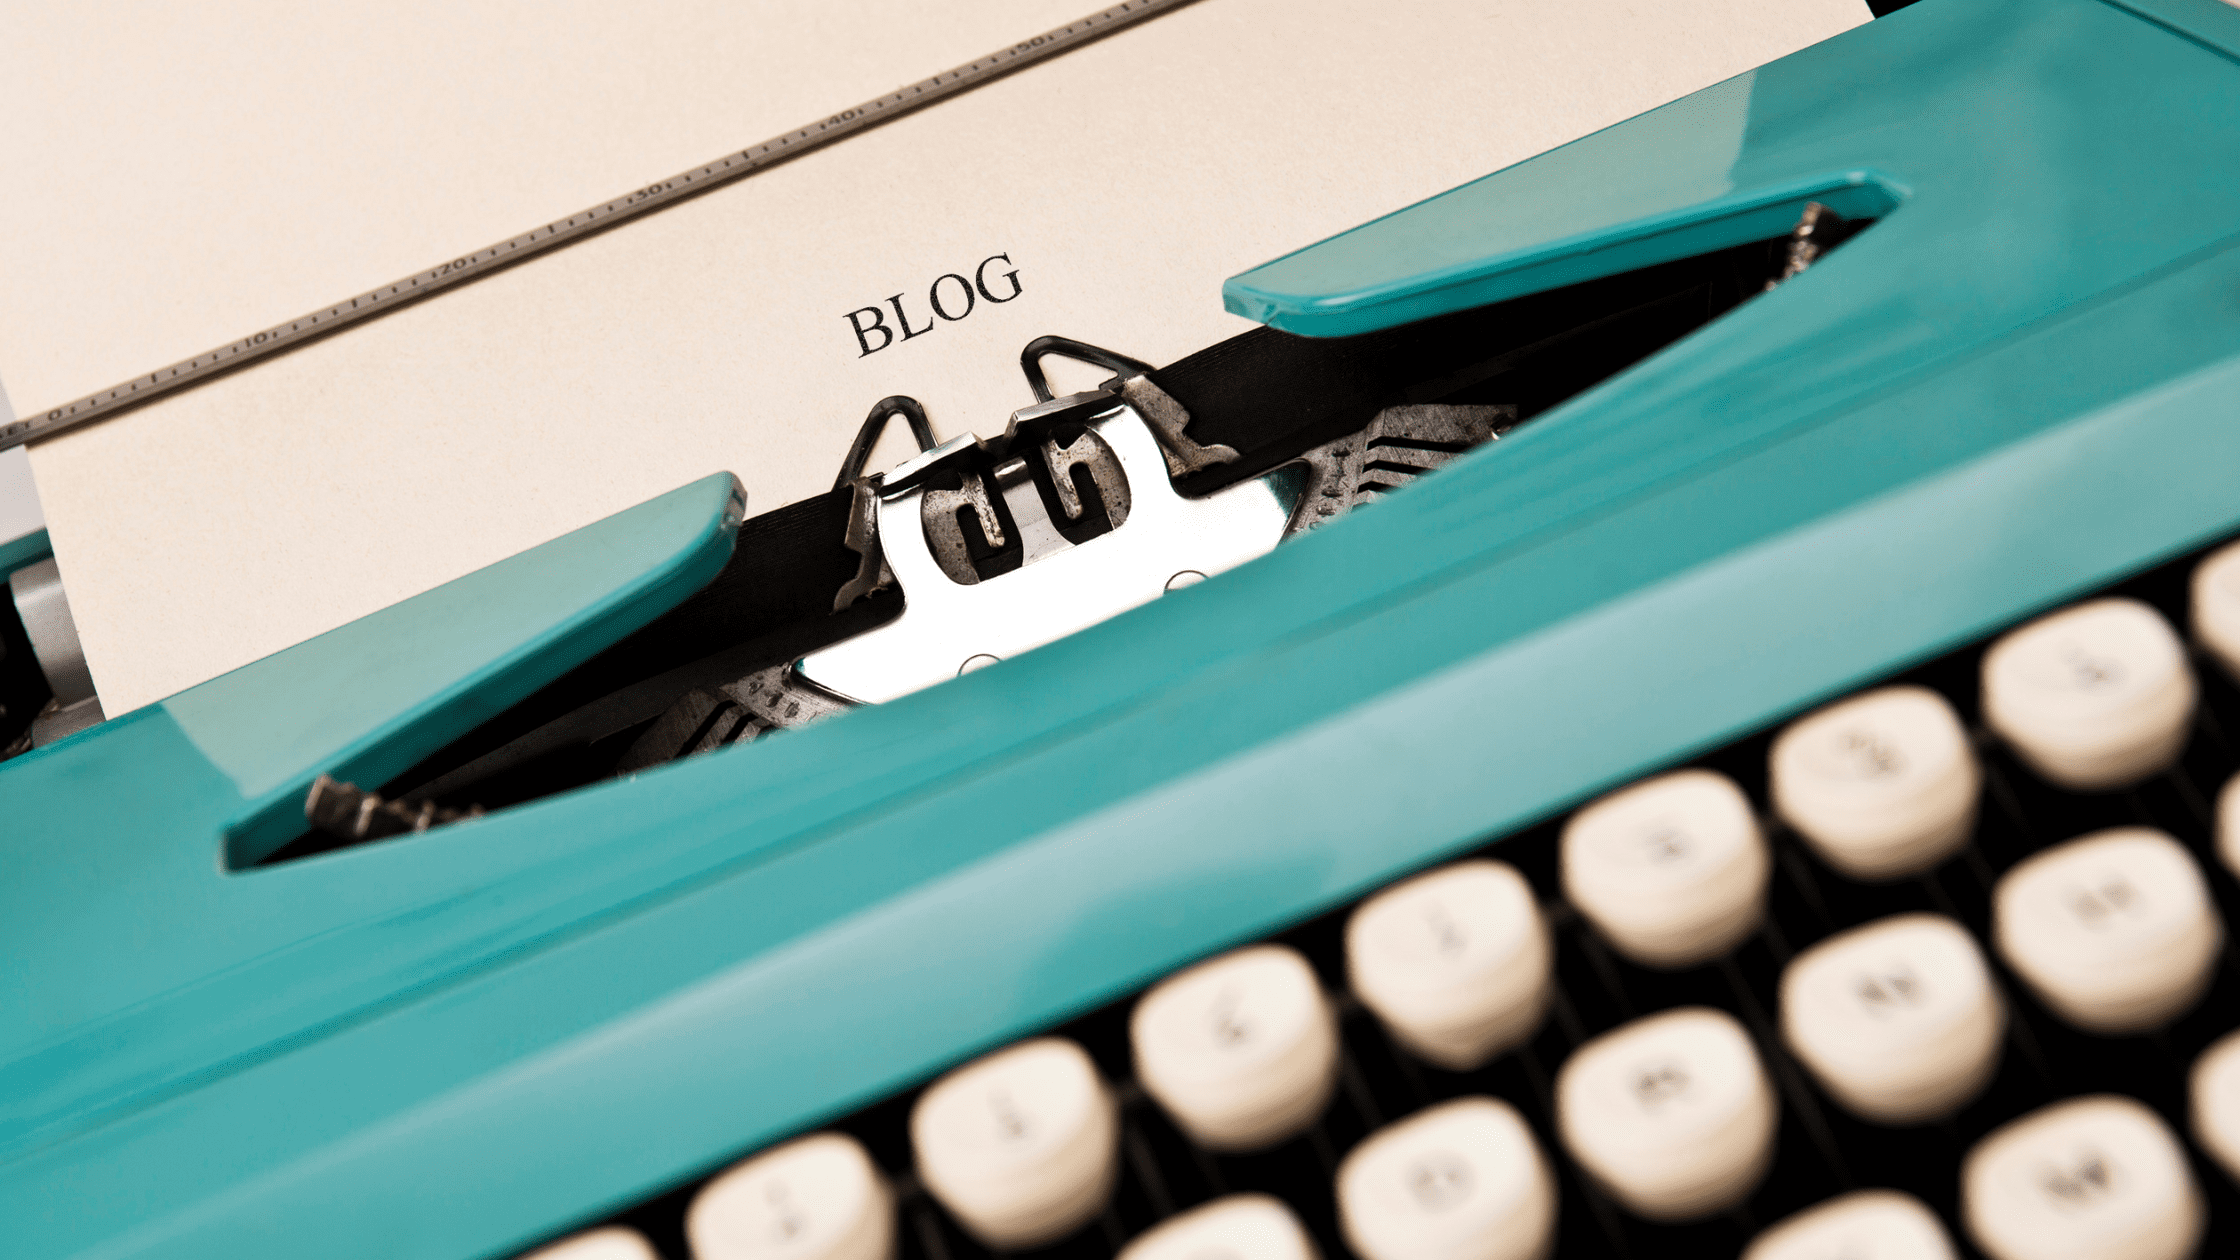 typewriter with blog written on paper